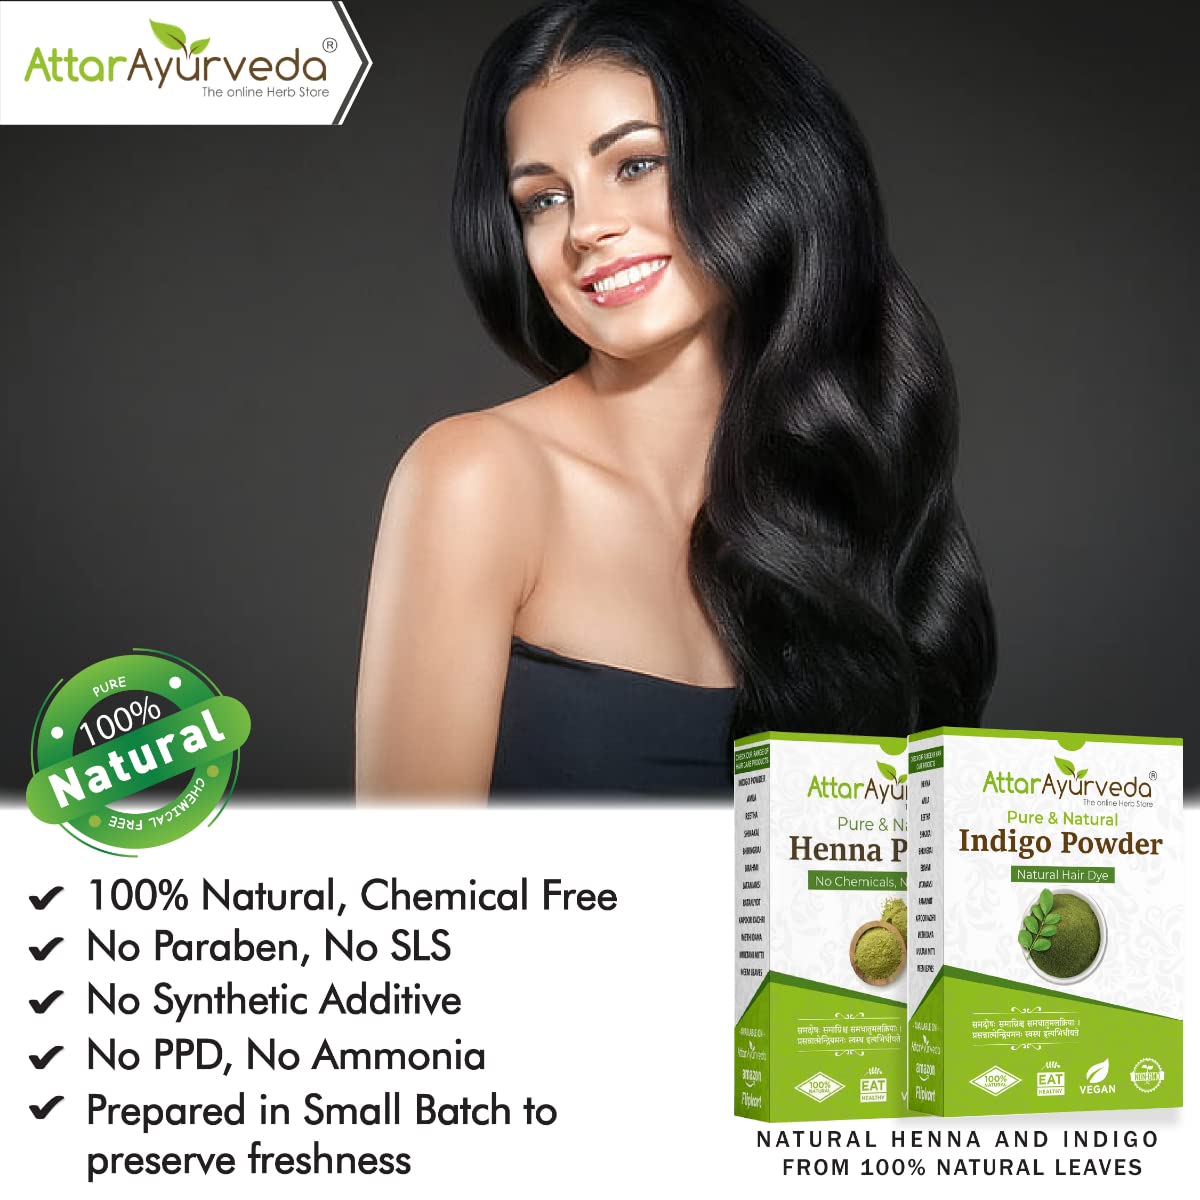 Buy Instant Black Hair colour shampoo online  The Wellness Shop